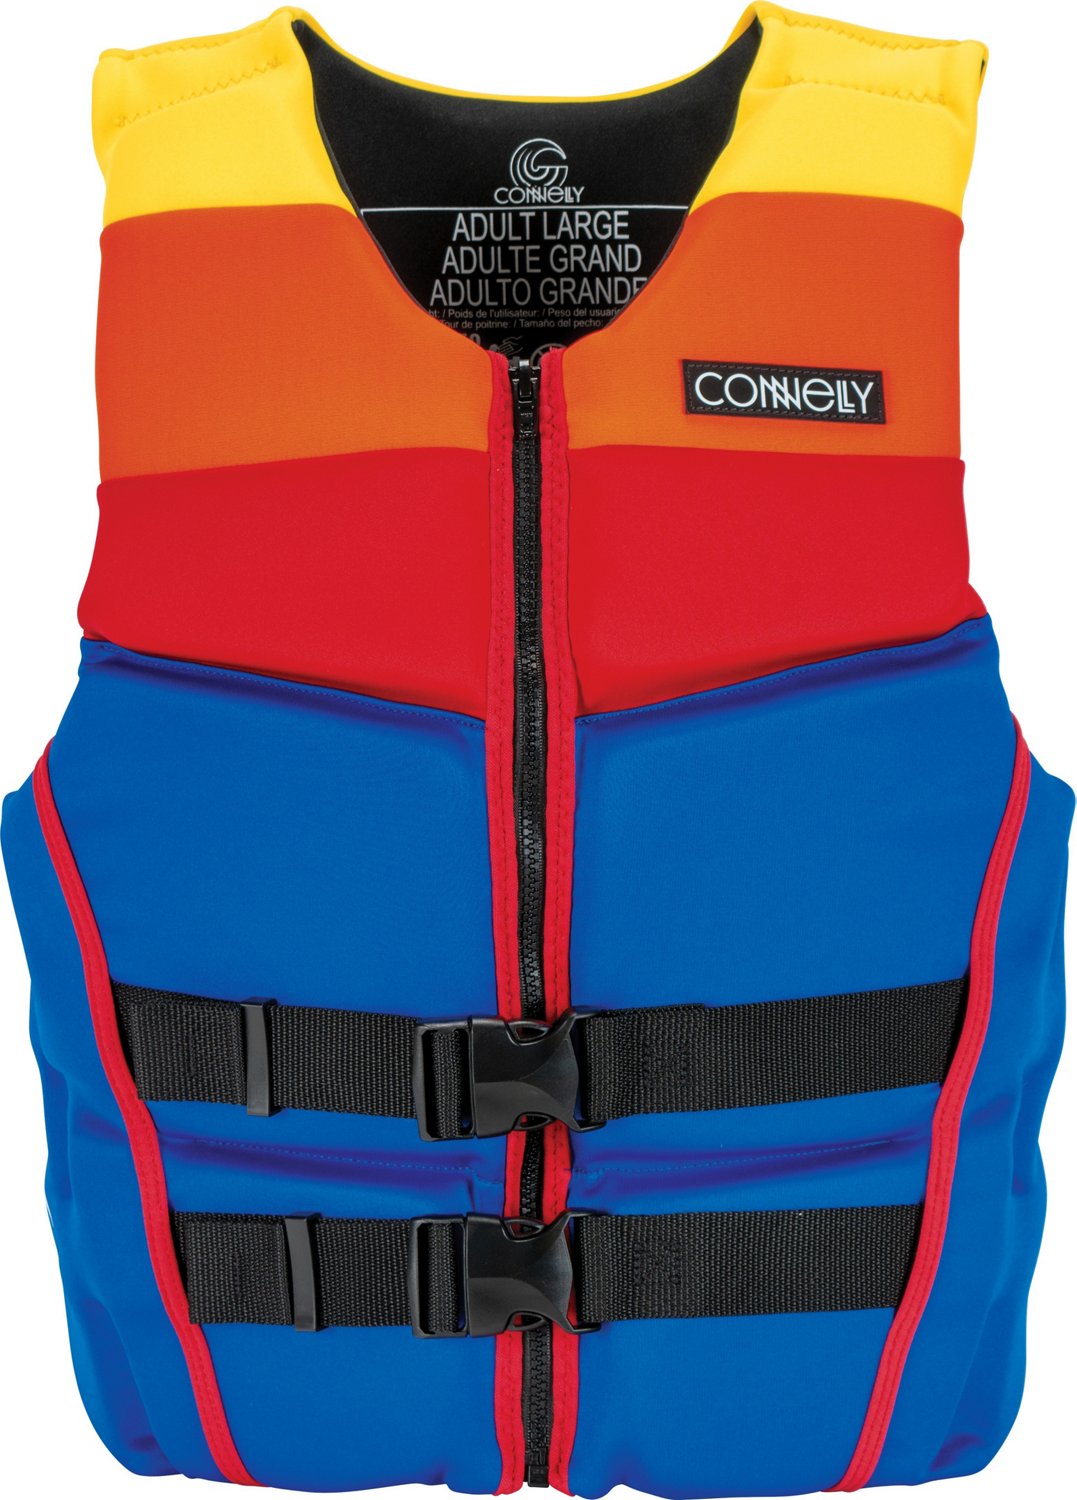 Fishing Life Jacket Water Sports Buoyancy Vest Adults Kids Floatation Vest L2D3 